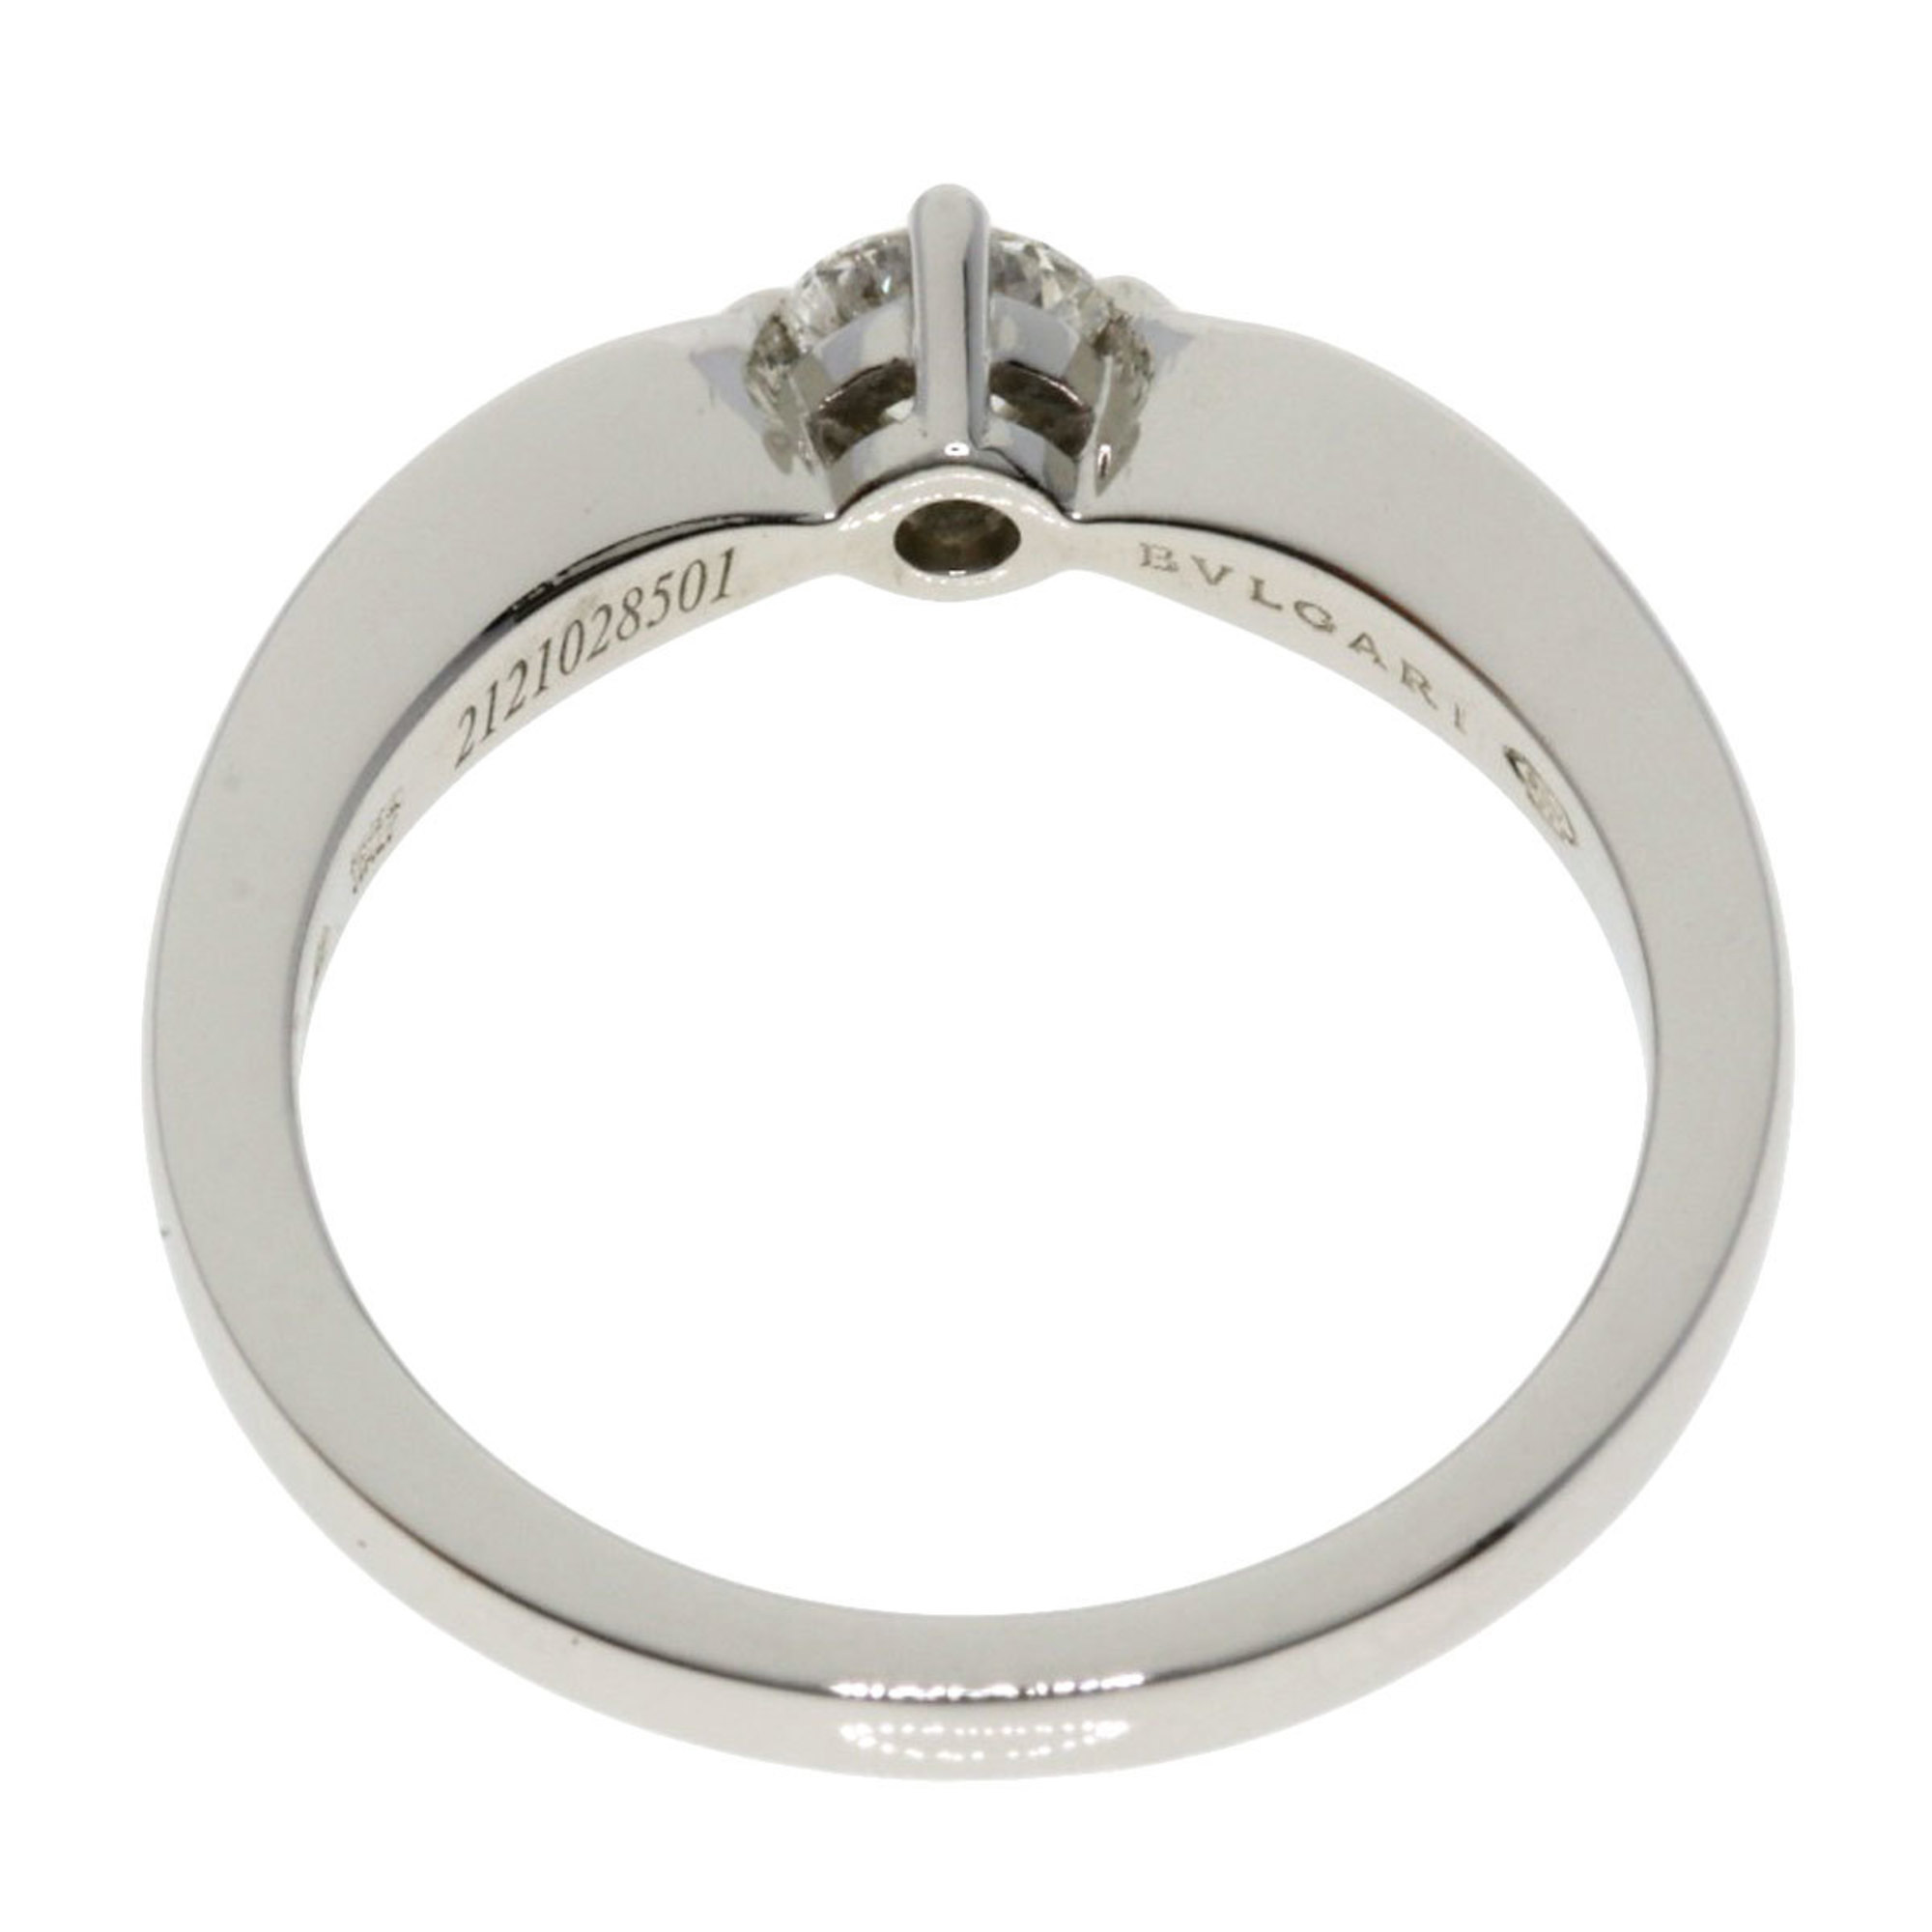 Bvlgari Dedicata Venezia Diamond Ring, Platinum PT950, Women's